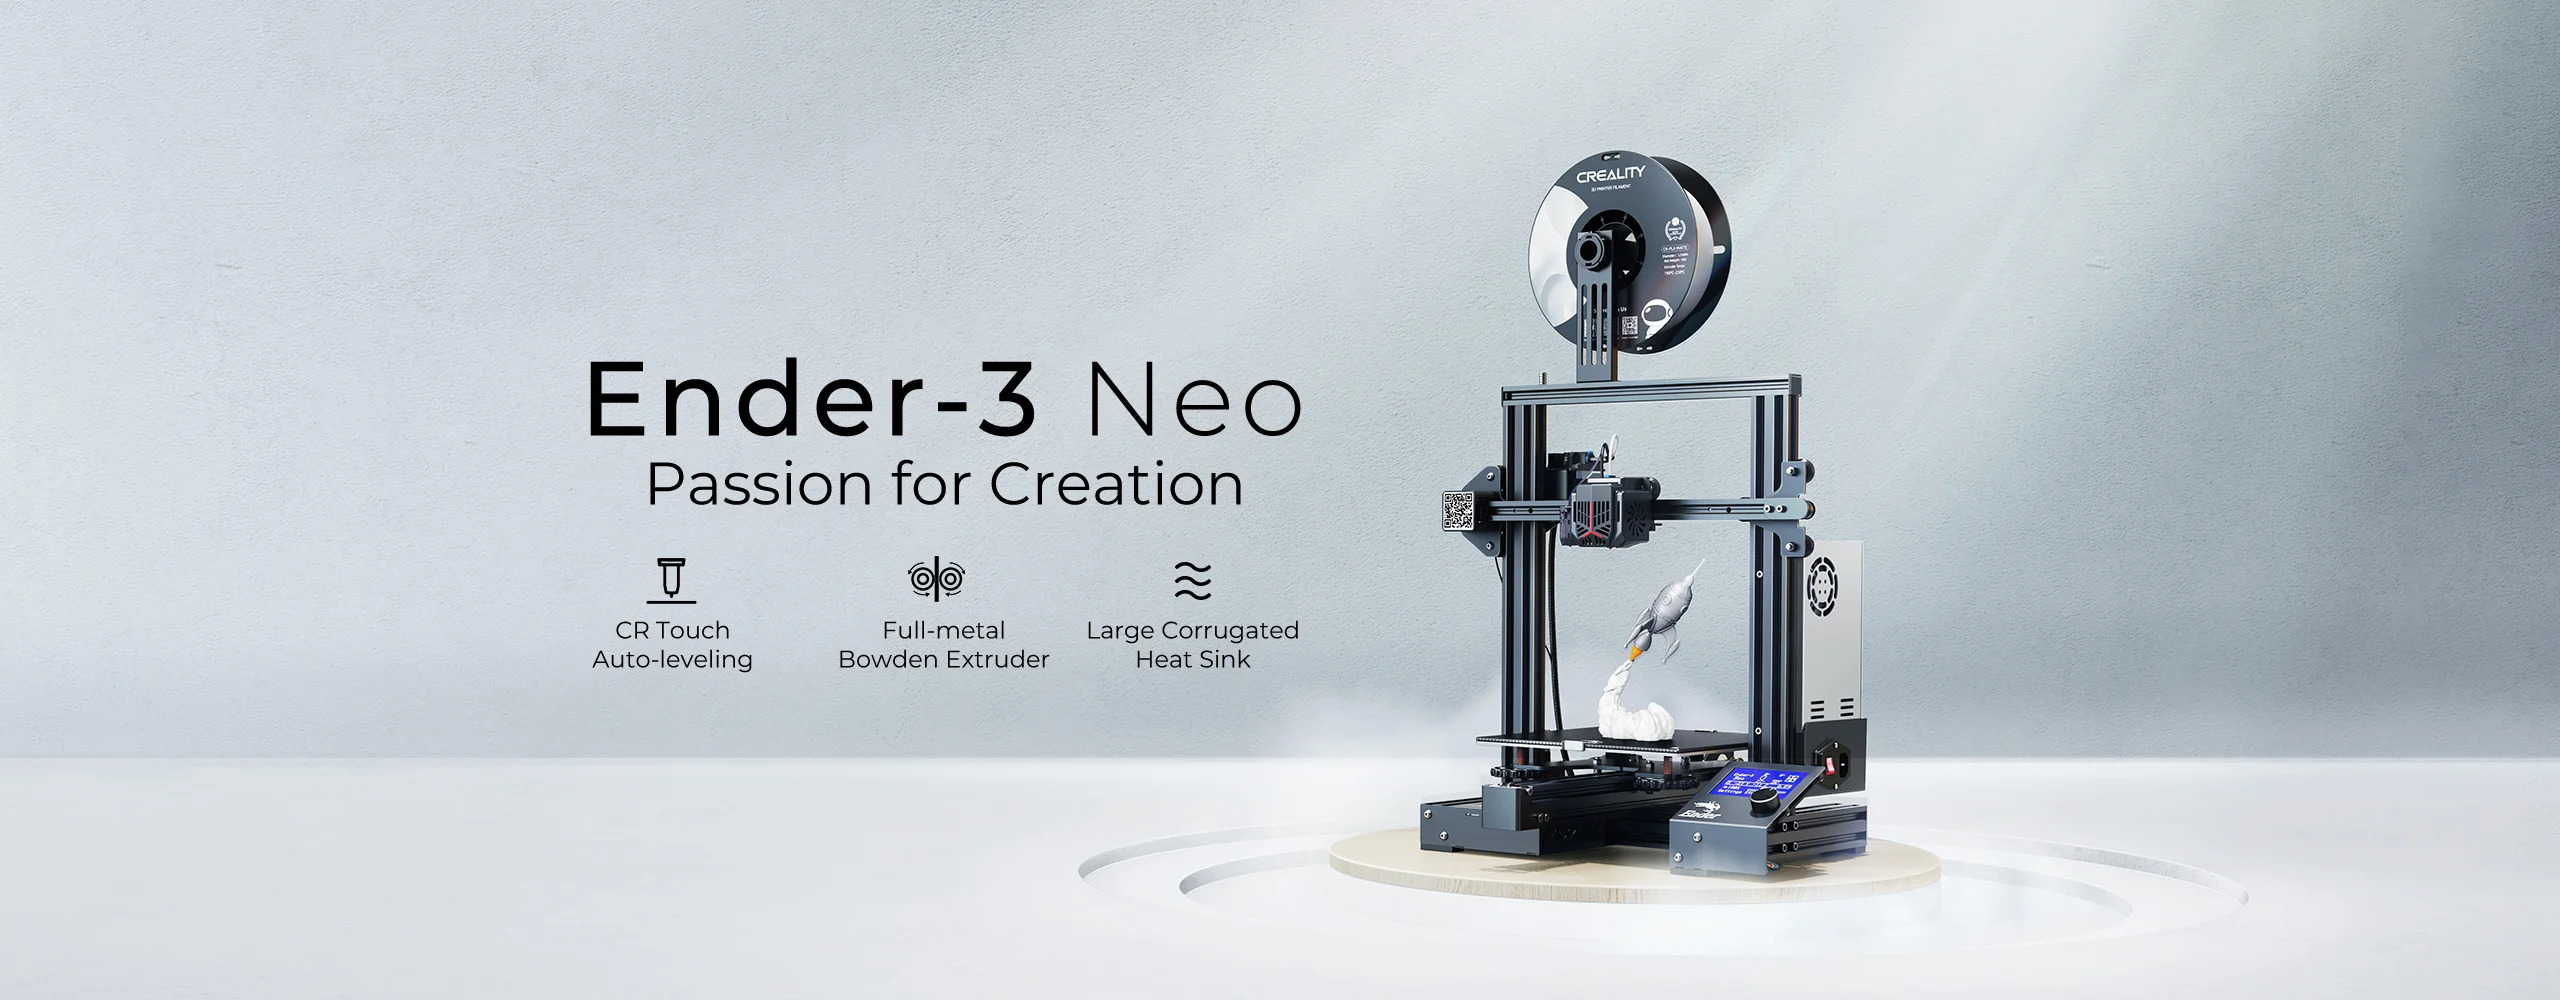 Ender-3 Neo